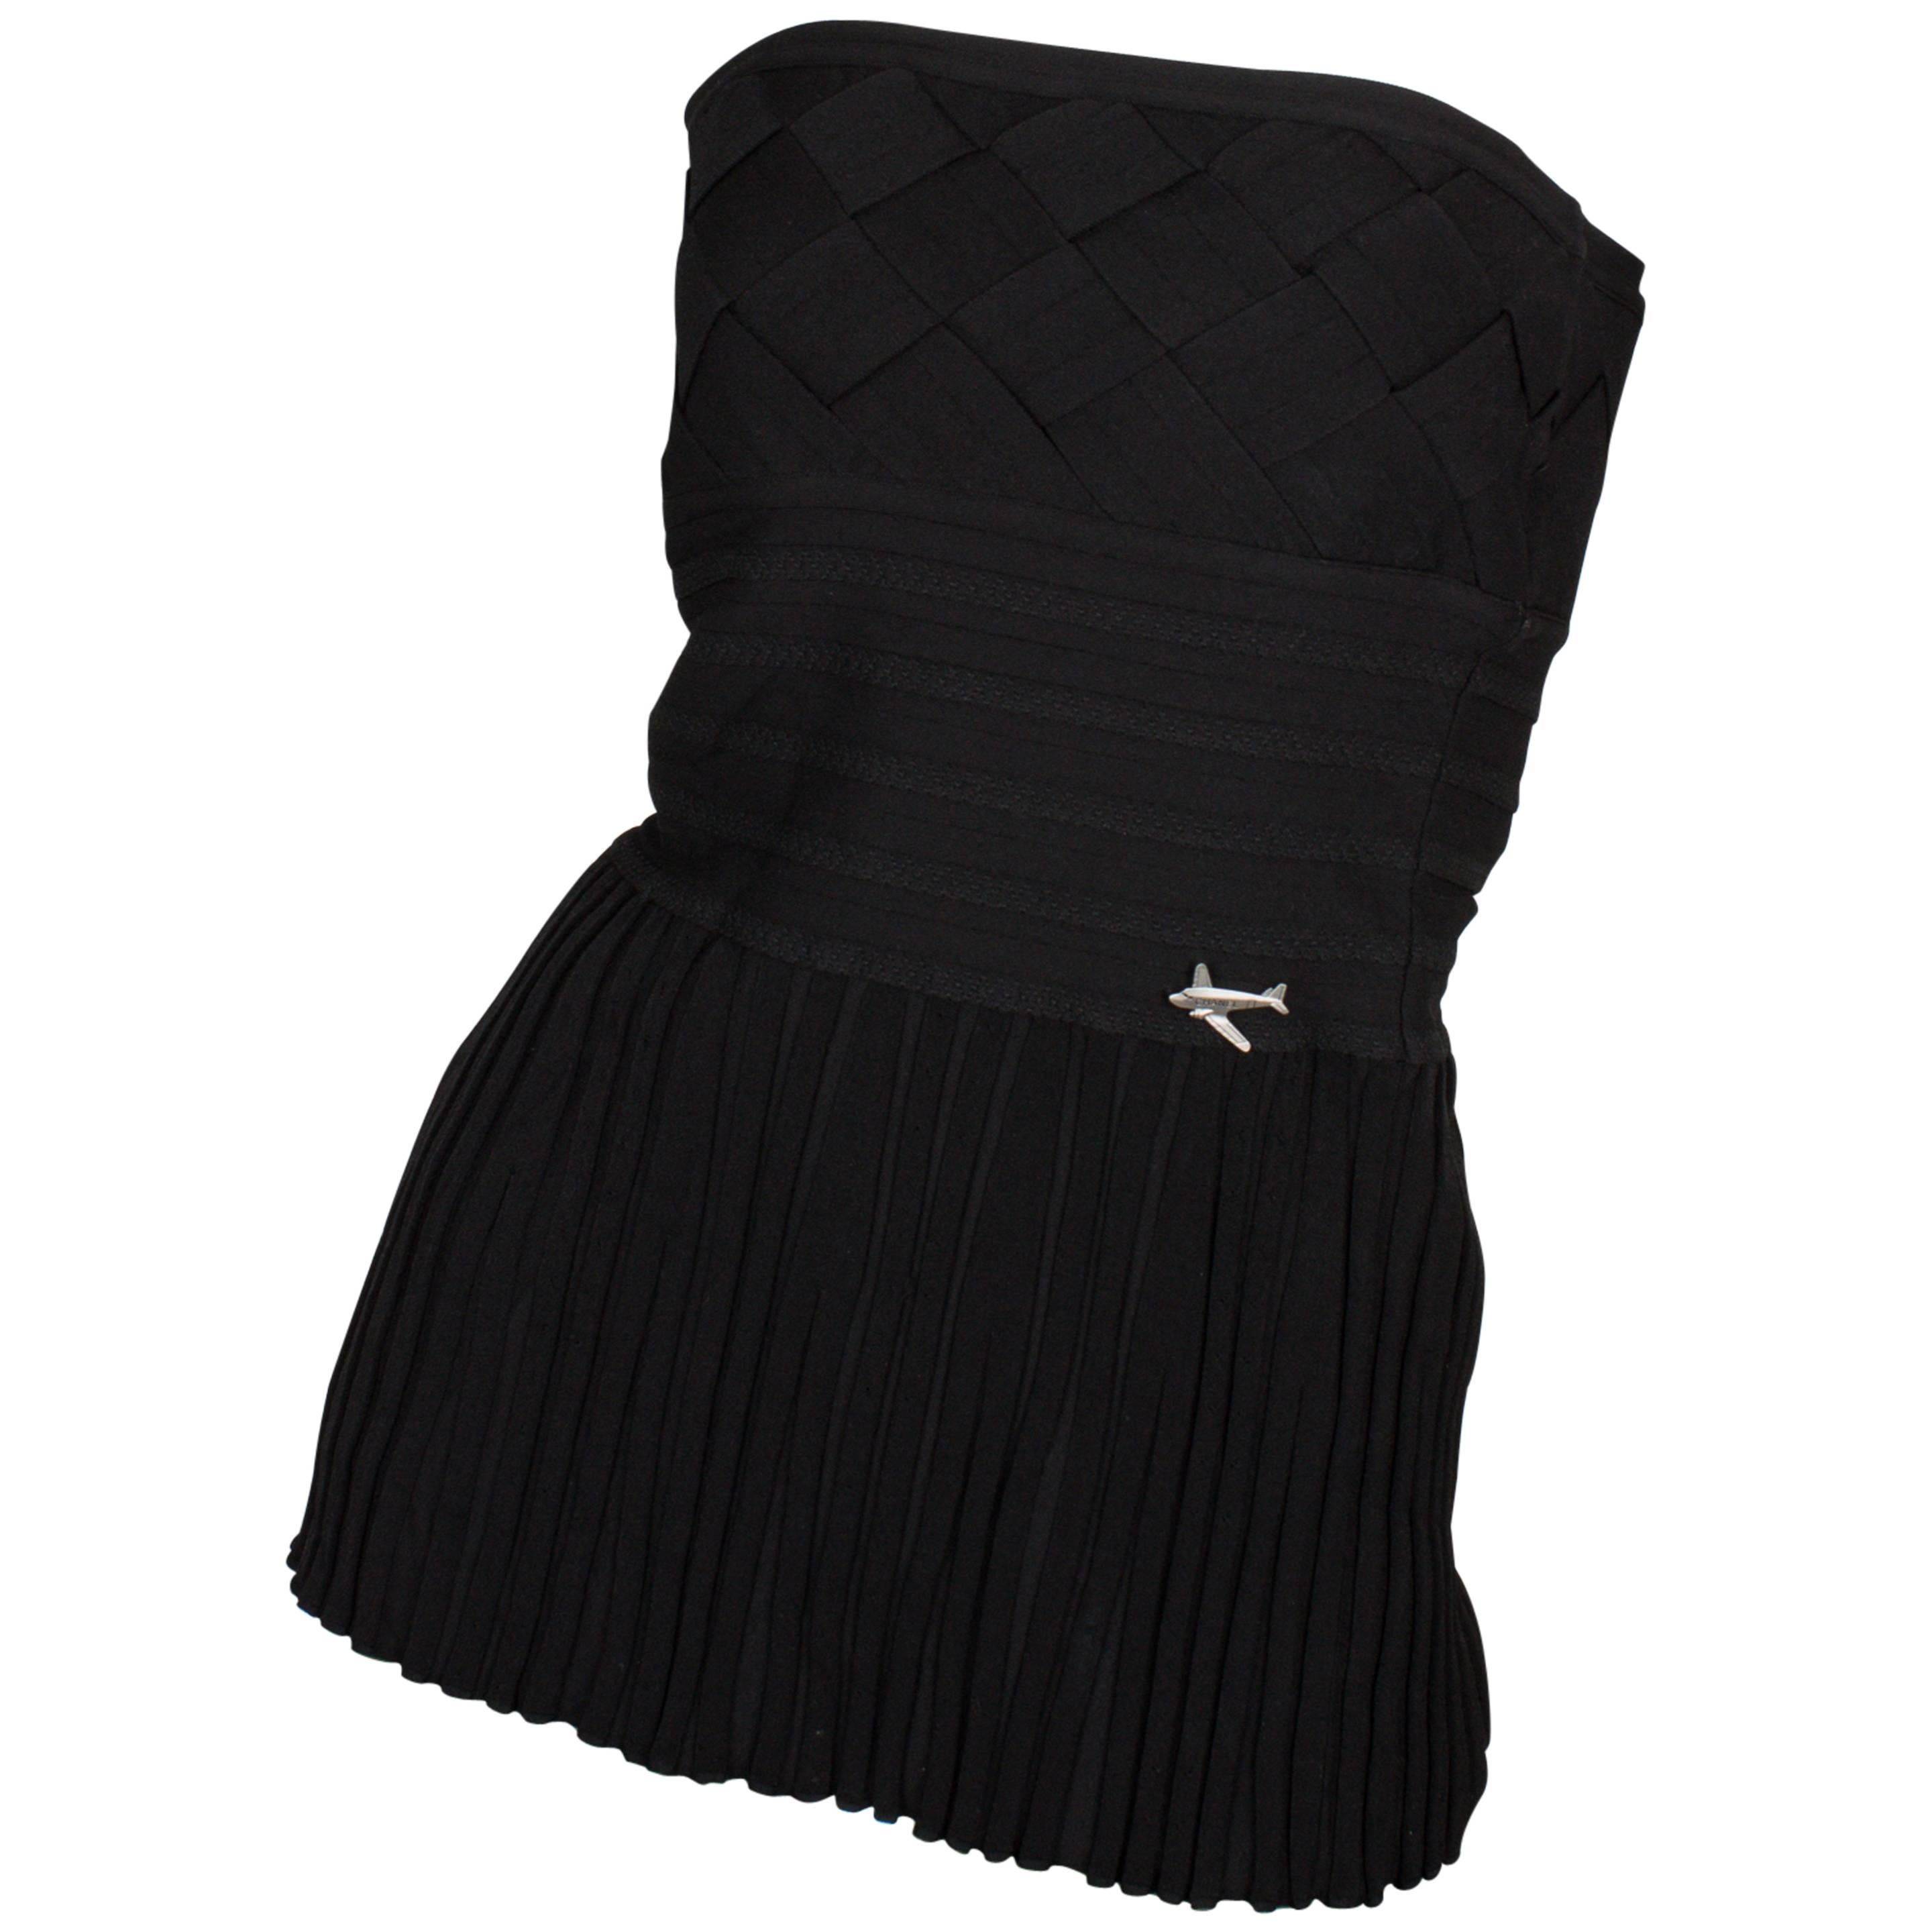 Chanel Strapless Top - black